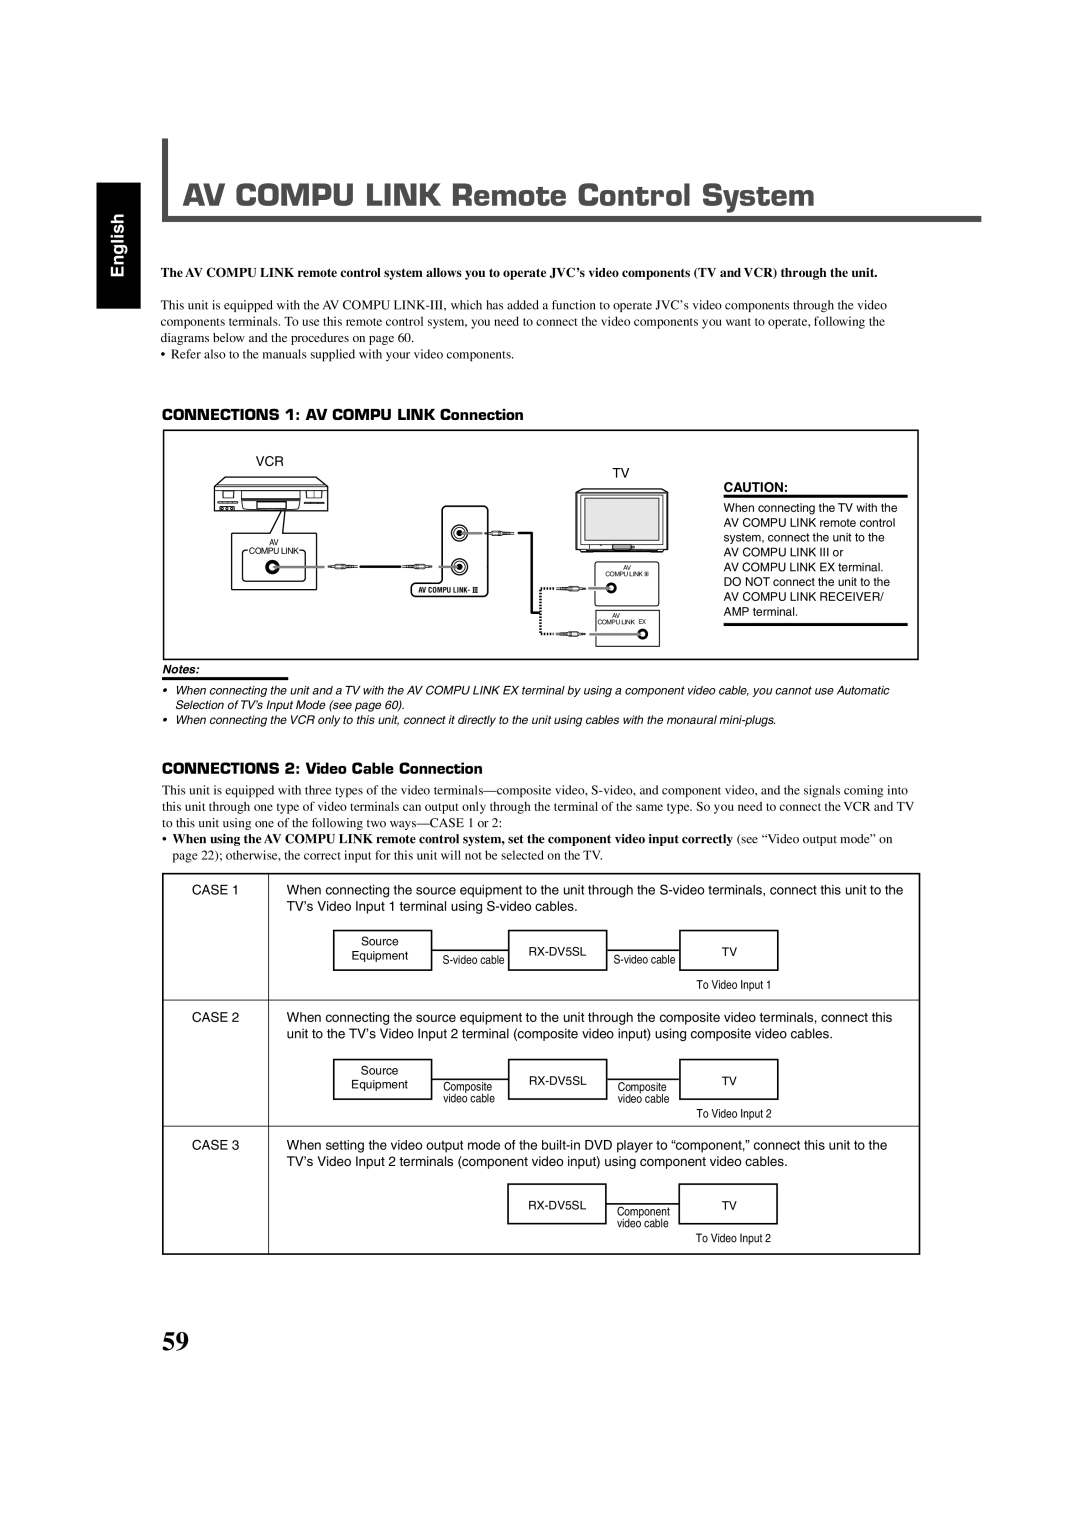 JVC RX-DV5SL manual AV COMPU LINK Remote Control System, English, CONNECTIONS 1: AV COMPU LINK Connection 